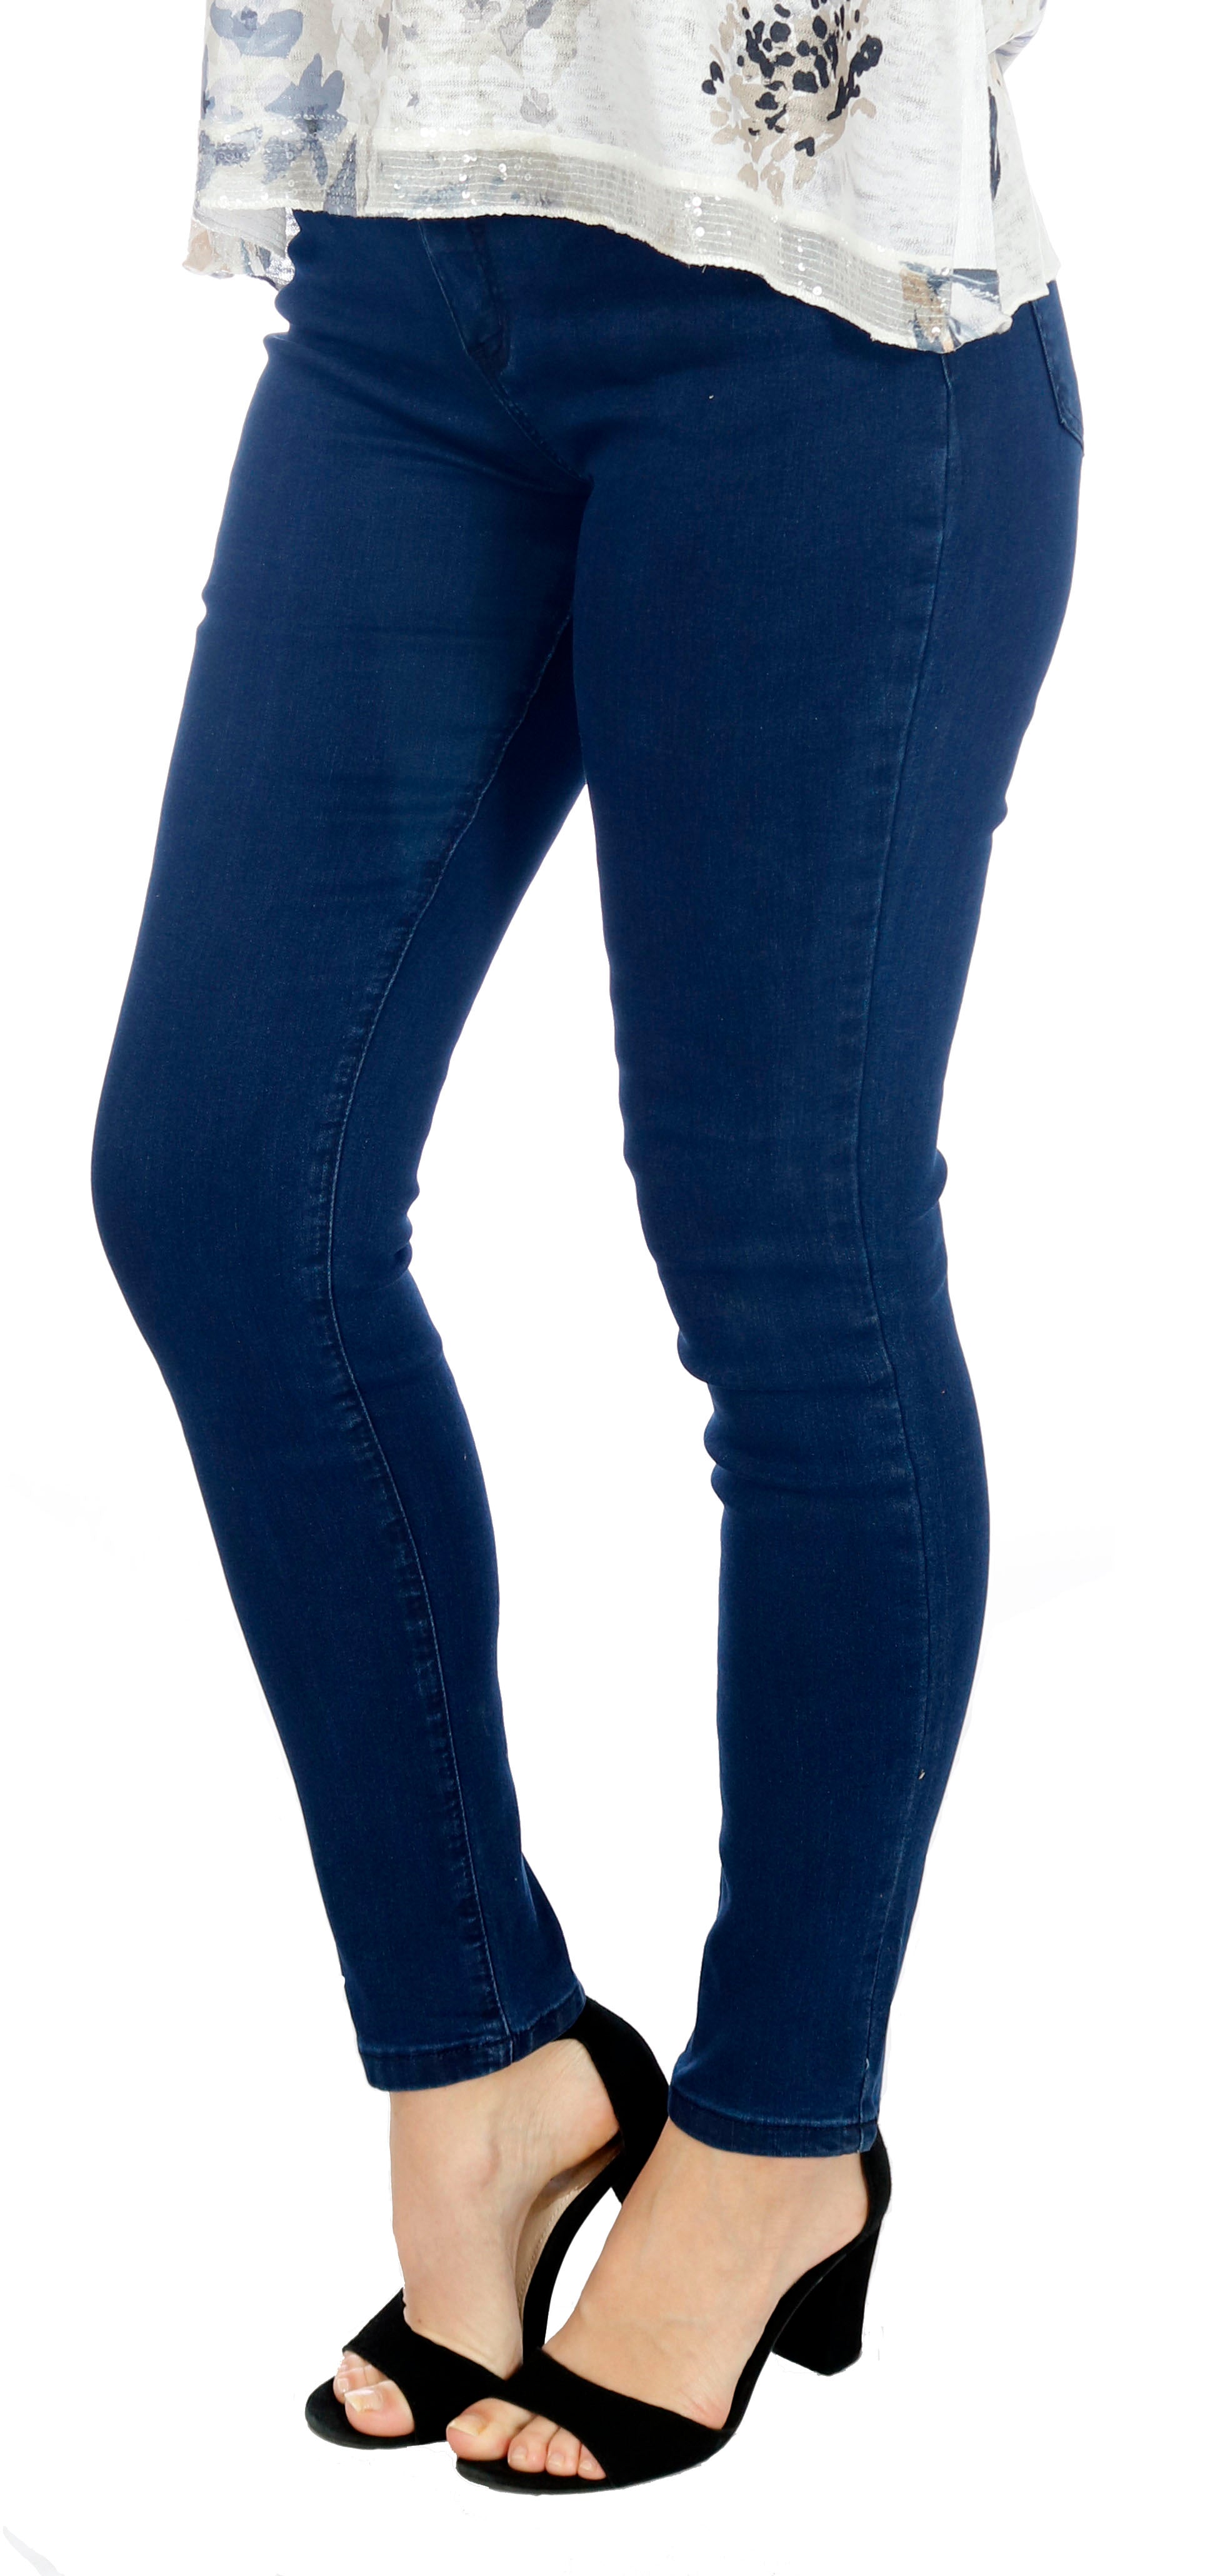 Classic Women's Cotton Blend Waist Jeggings Stretchy Skinny Pants Jeans  Leggings